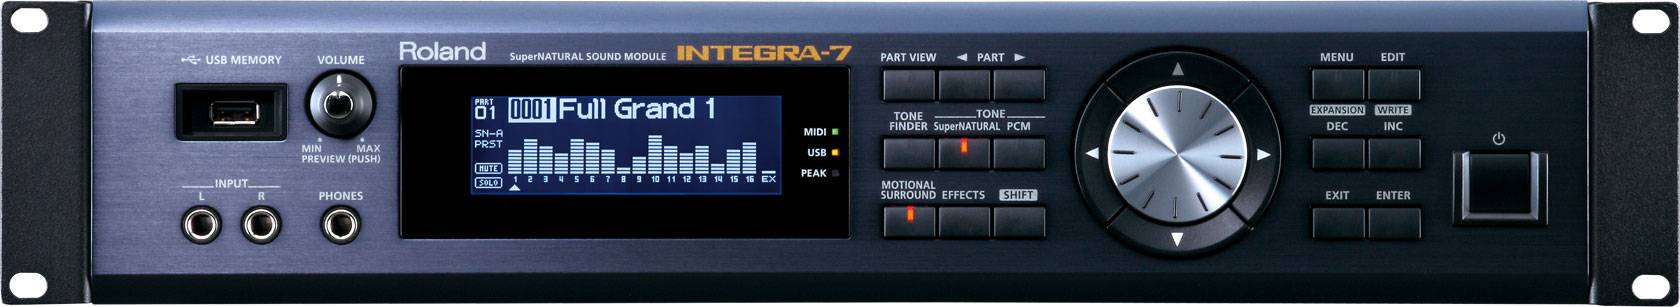 Roland INTEGRA 7 Digital Synthesizer